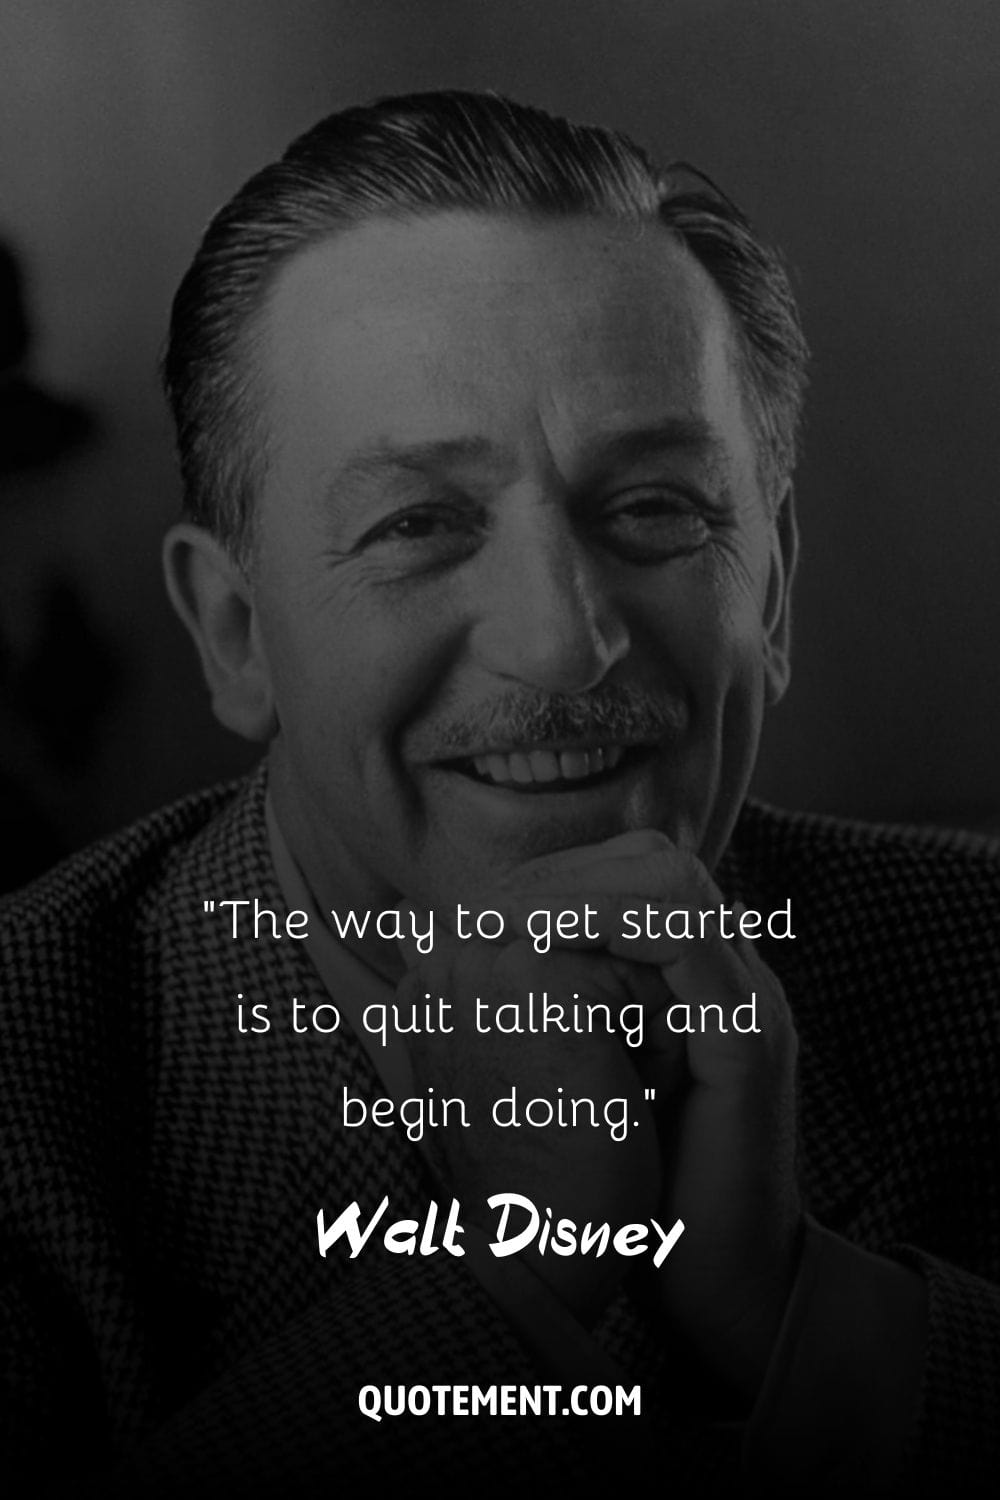 Walt Disney's iconic smile framed in portrait.